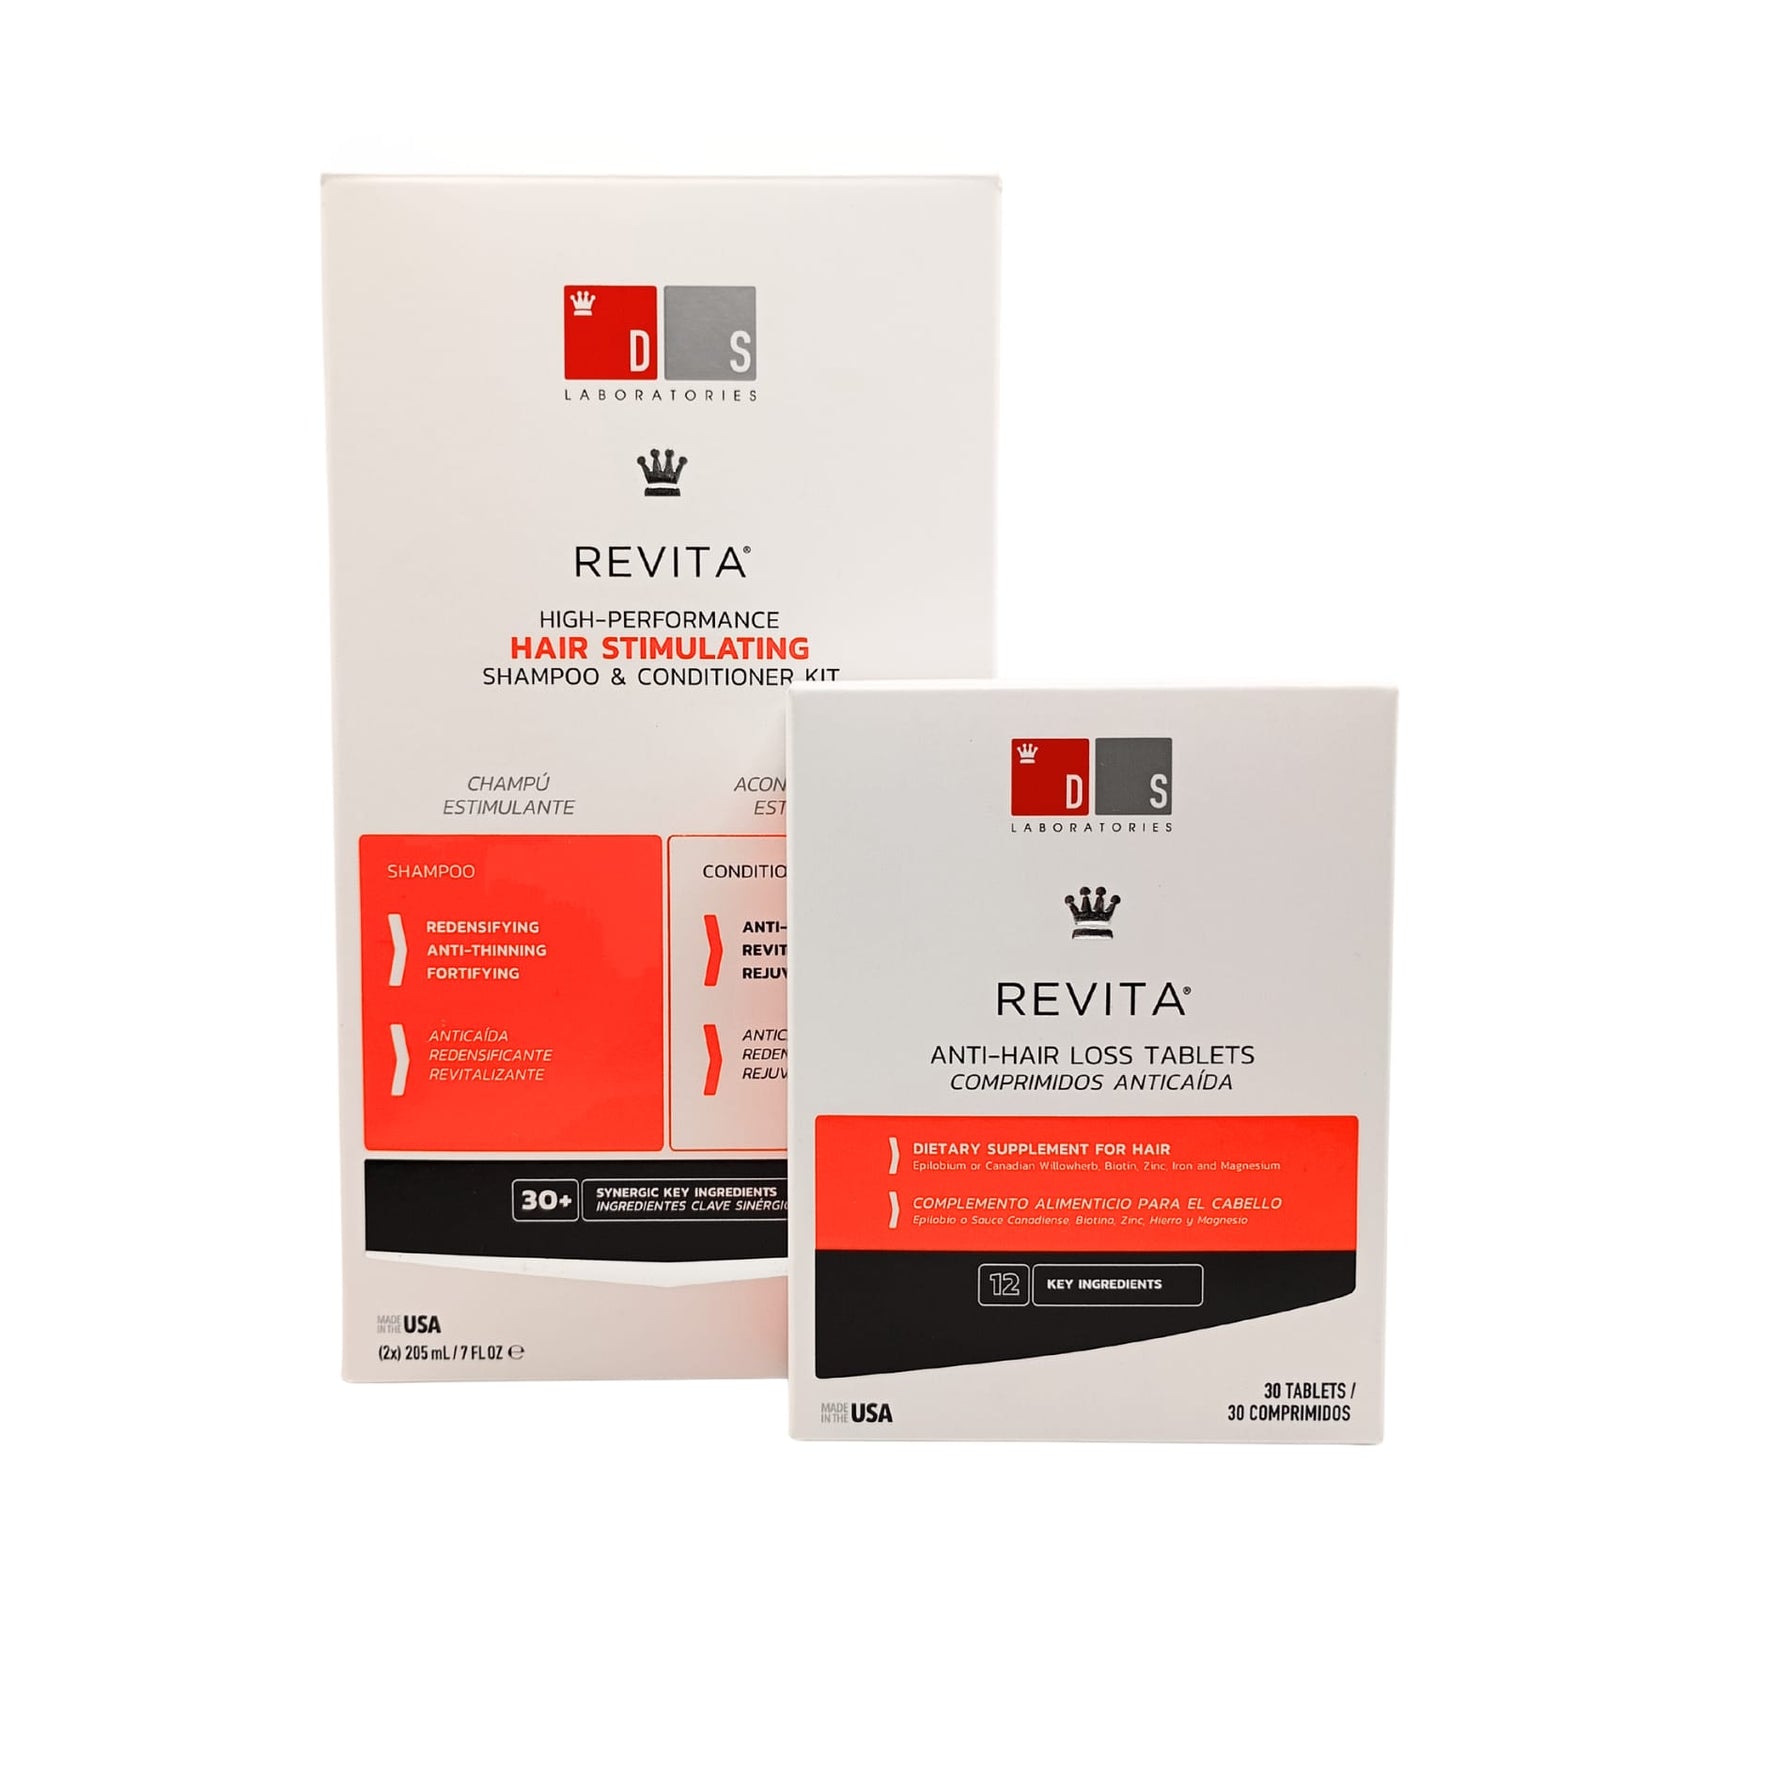 Revita Tratamiento Capilar Completo: Revita Hair Stimulating Champú + Acondicionador (205ml+205ml)+Revita (30 Comprimidos)